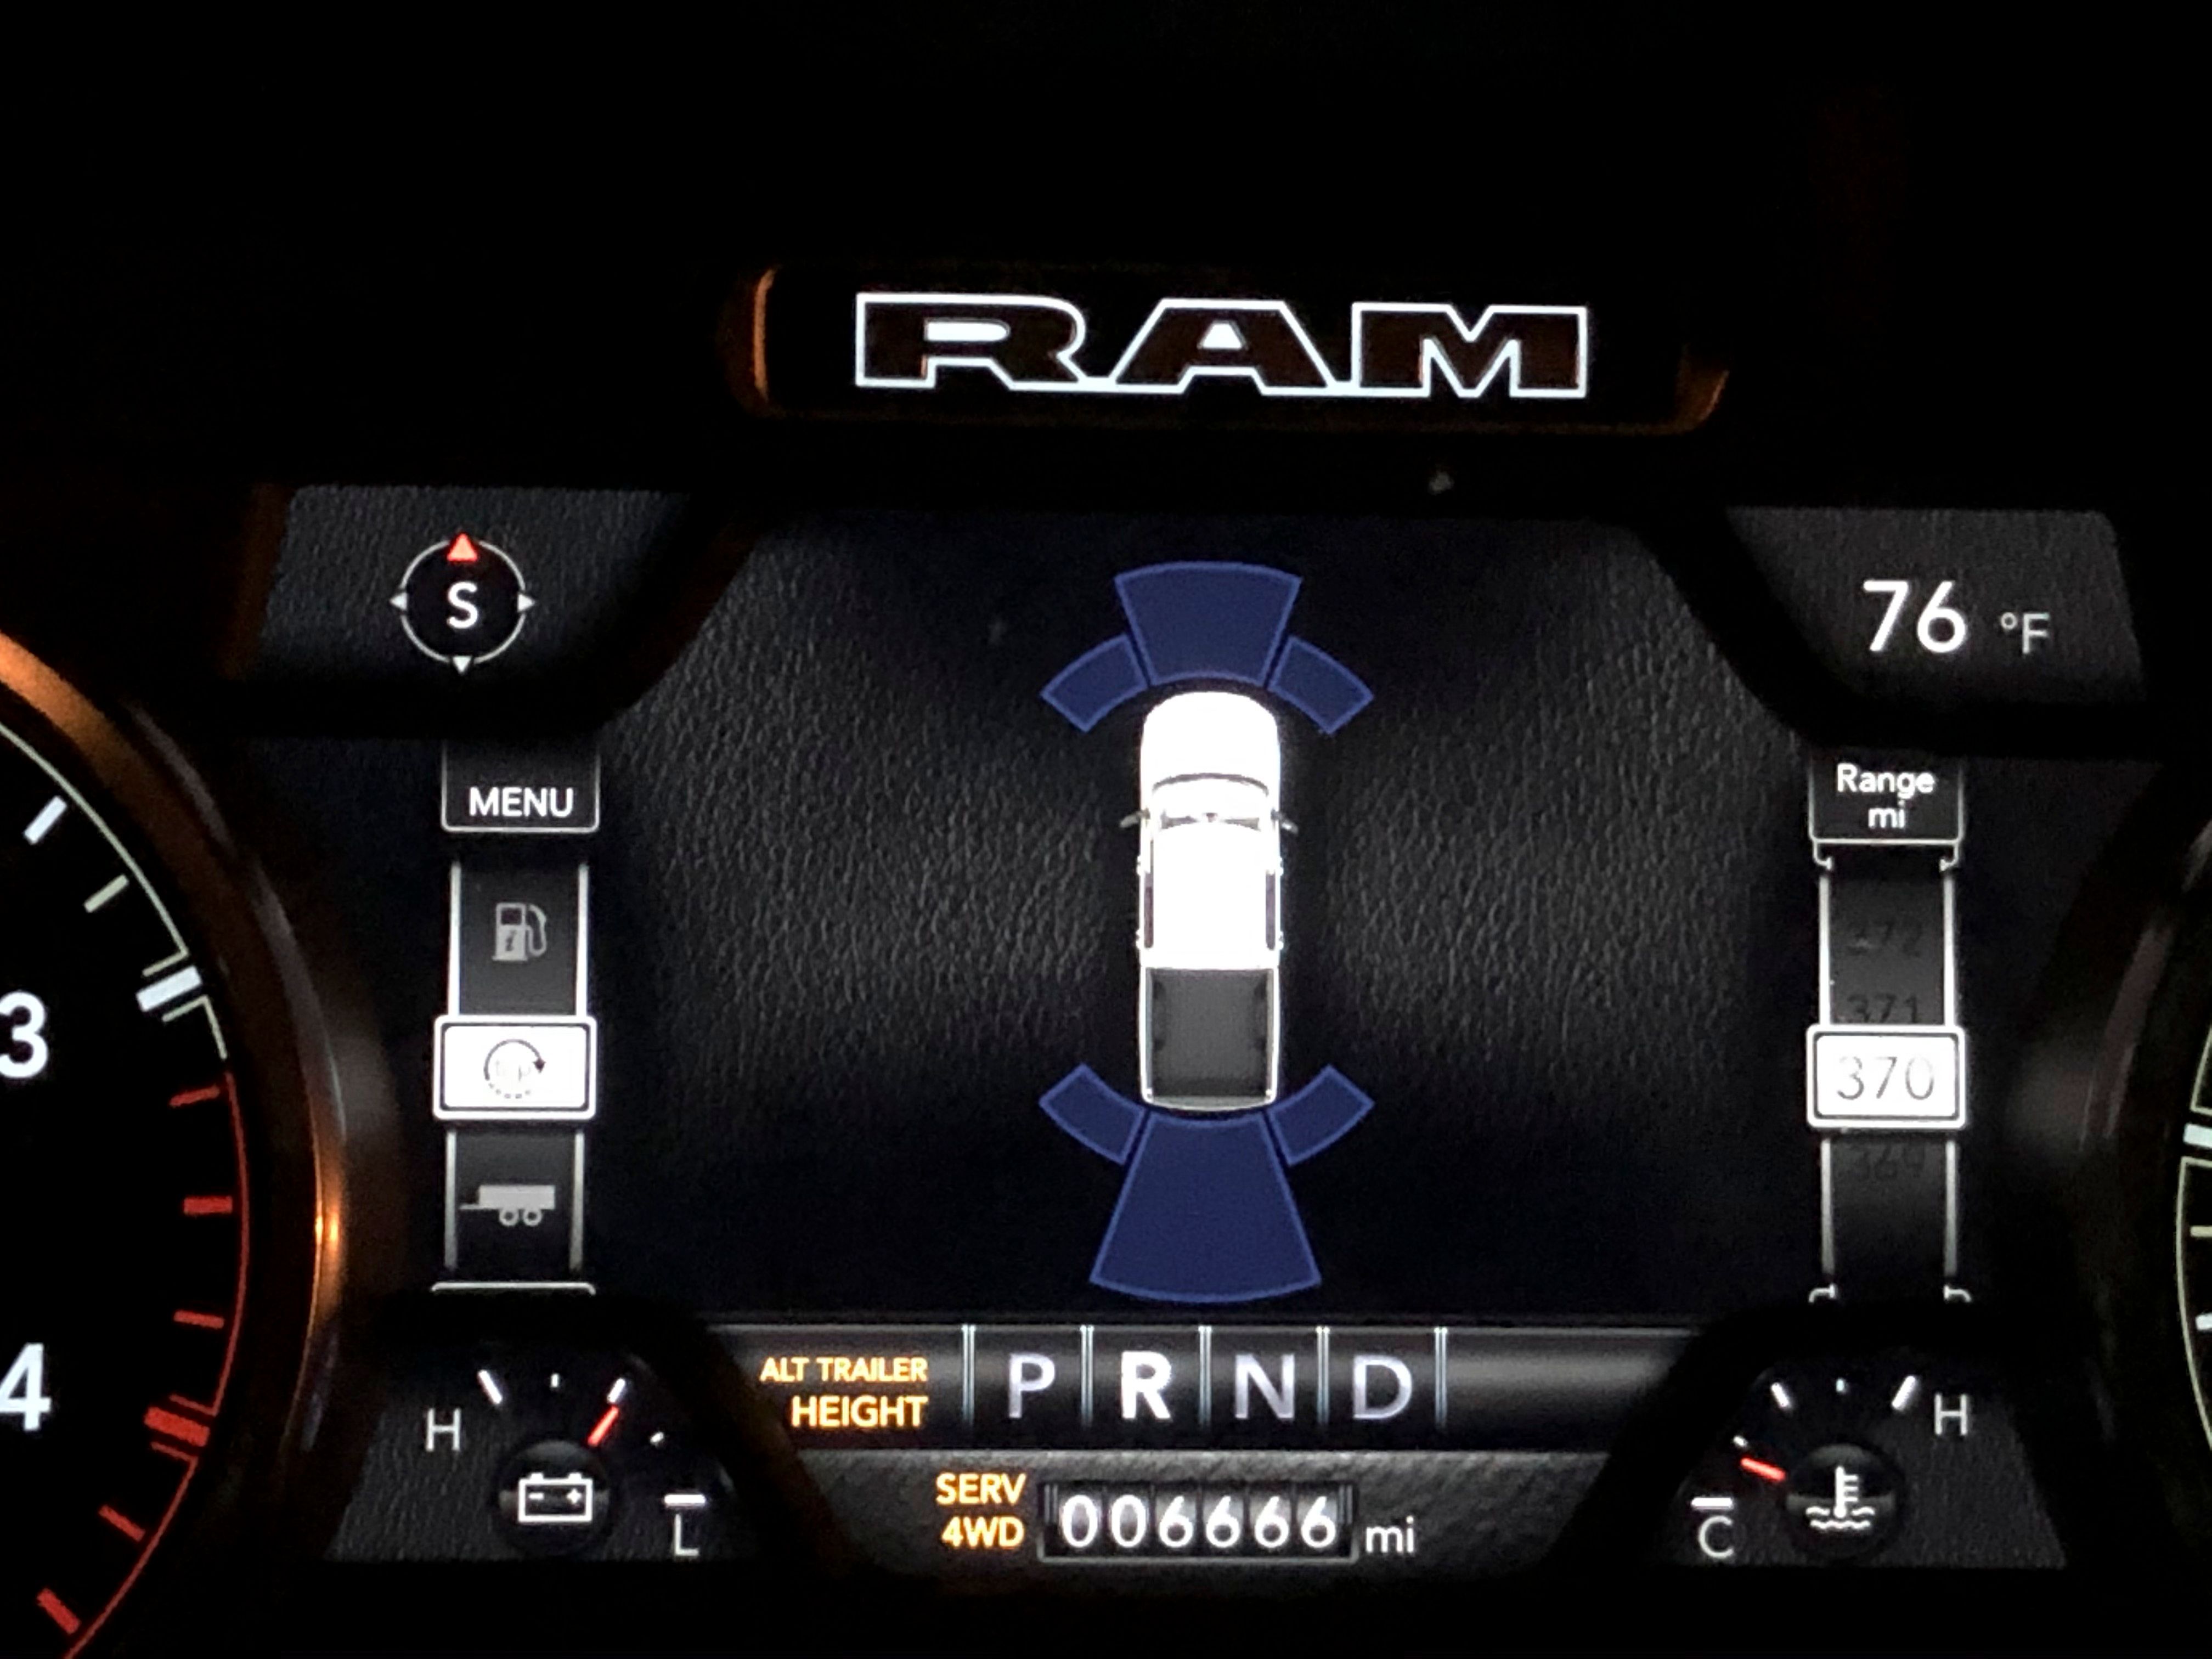 2020 Ram 2500 HD - Driven